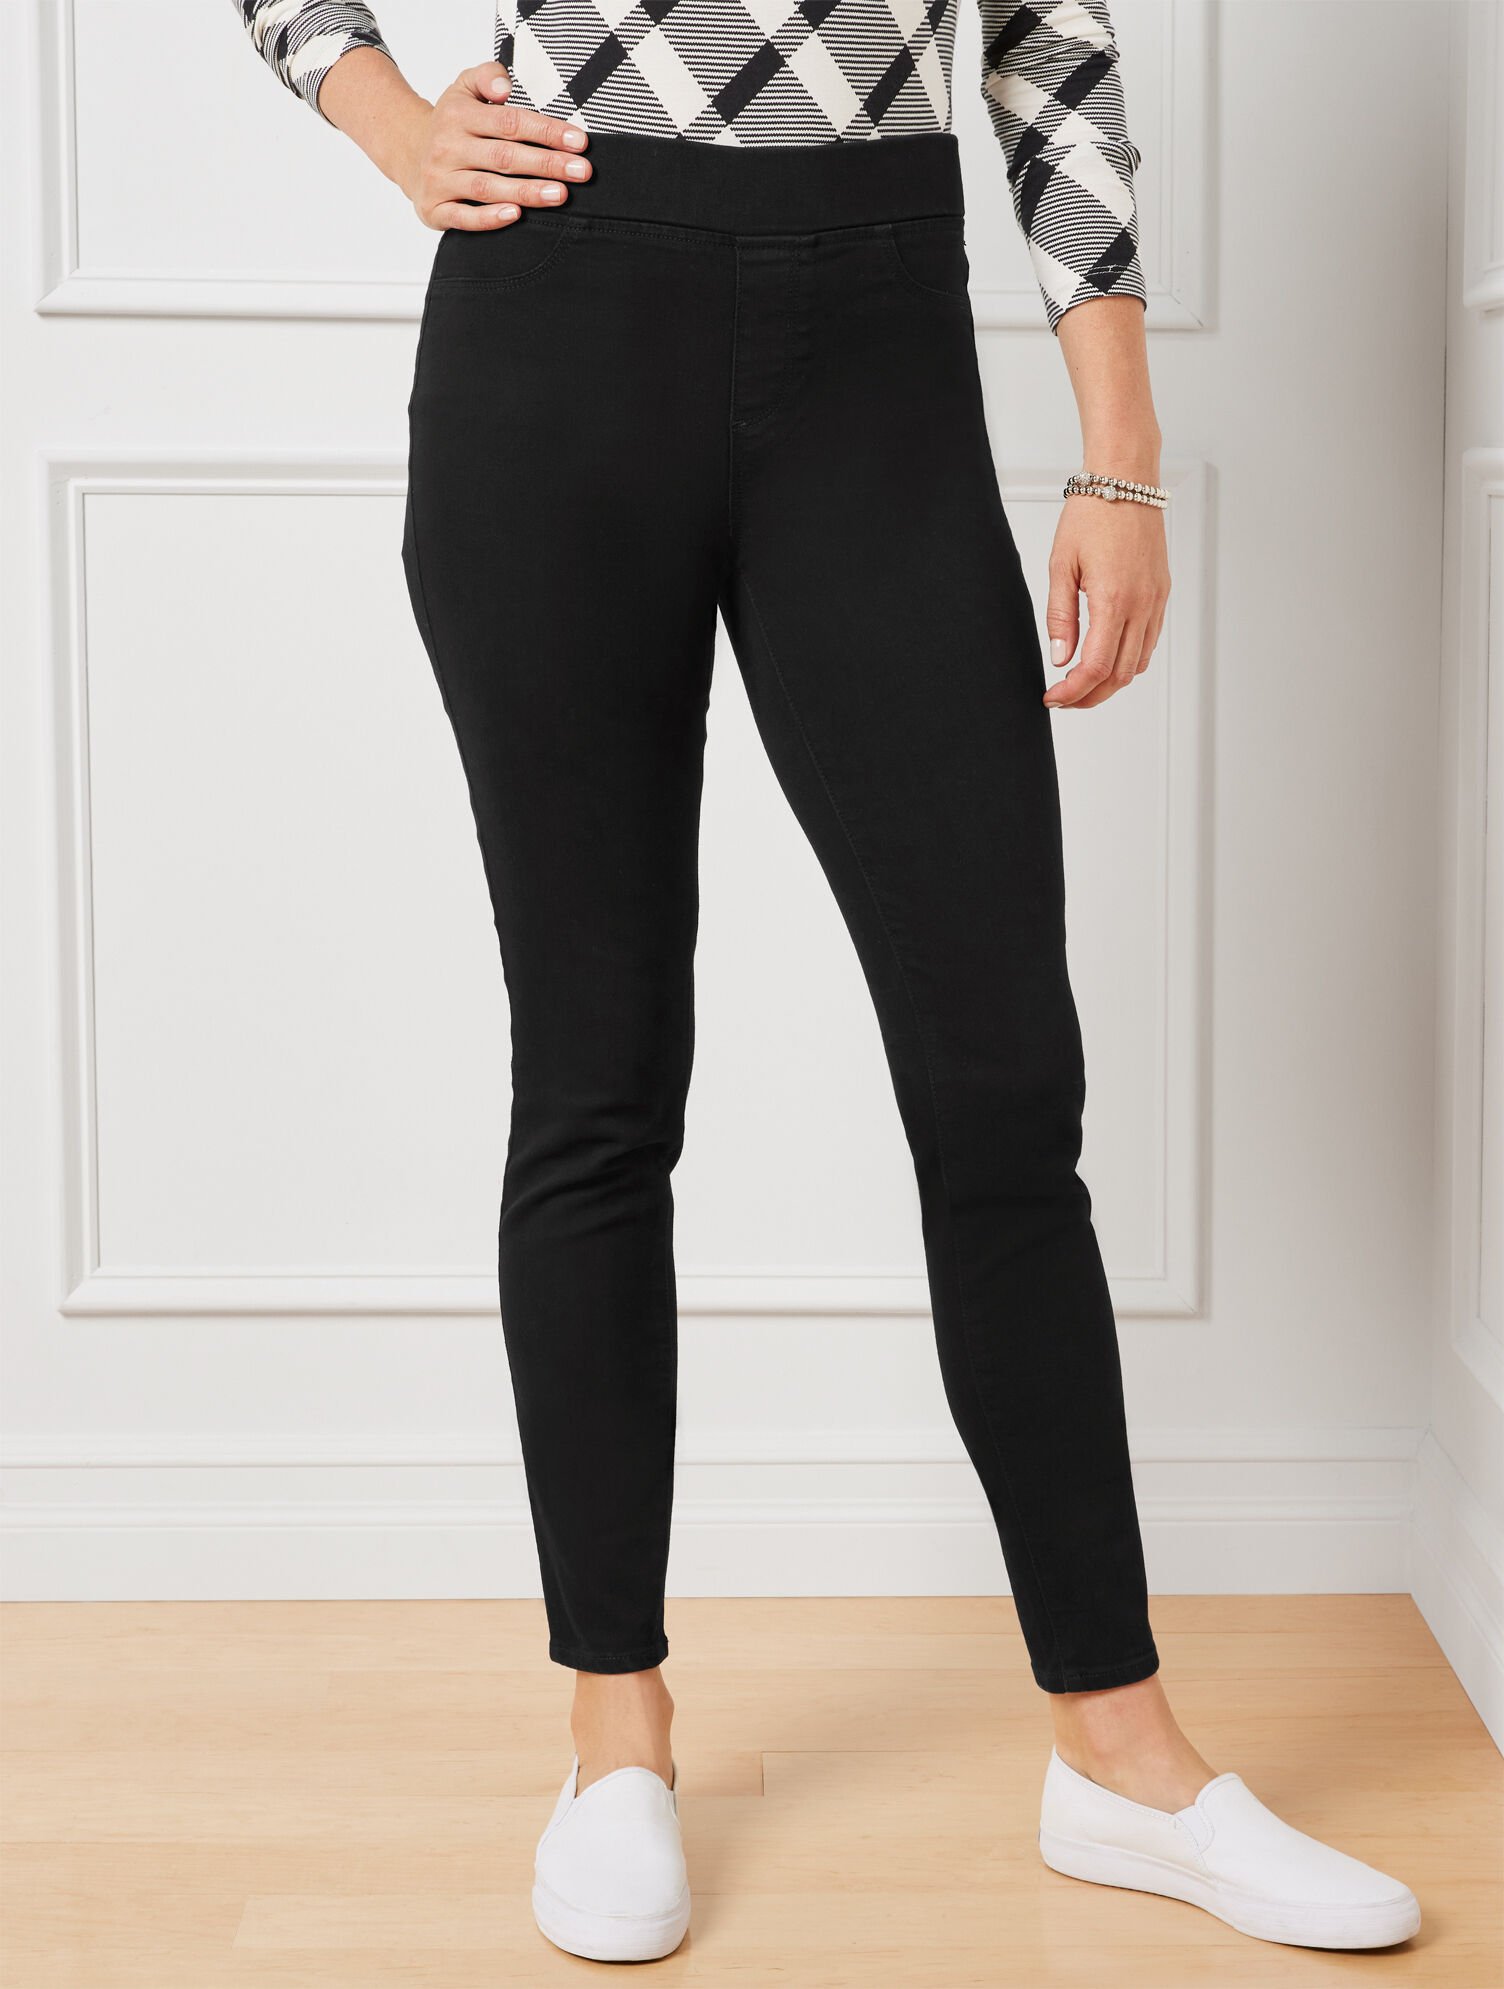 Buy Black Cotton Blend Solid Jeans Jeggings For Women Online In